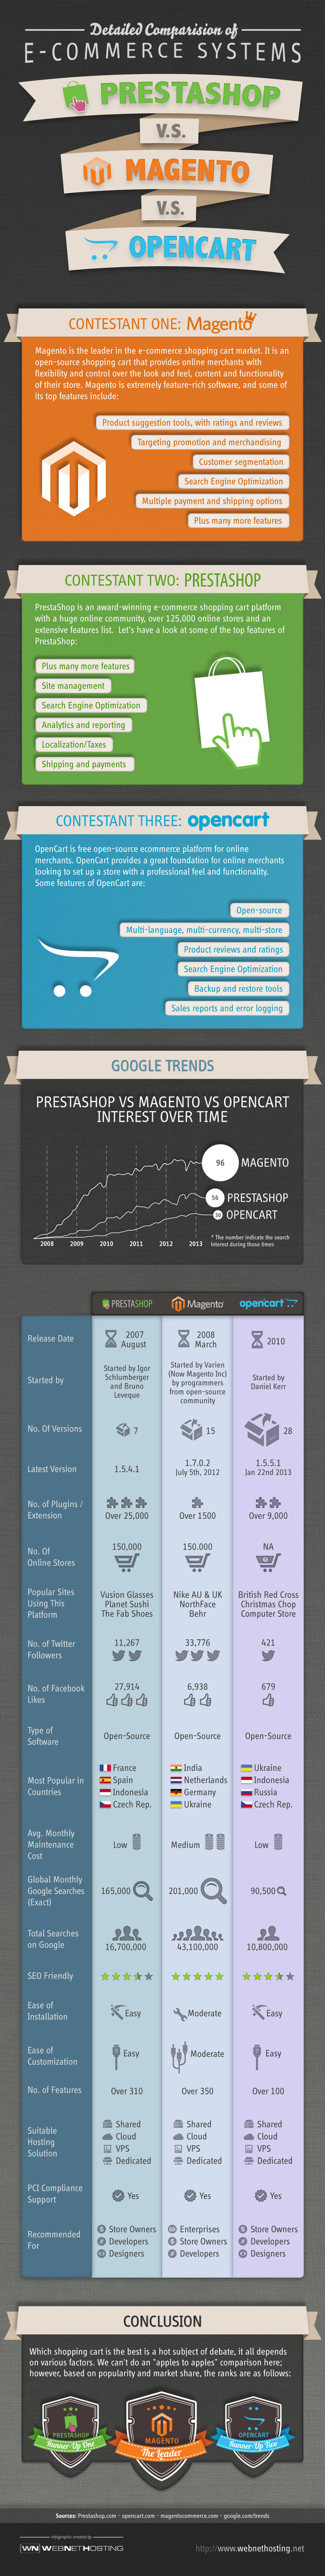 PrestaShop vs. Magento vs. Open Cart - InfoGraphic